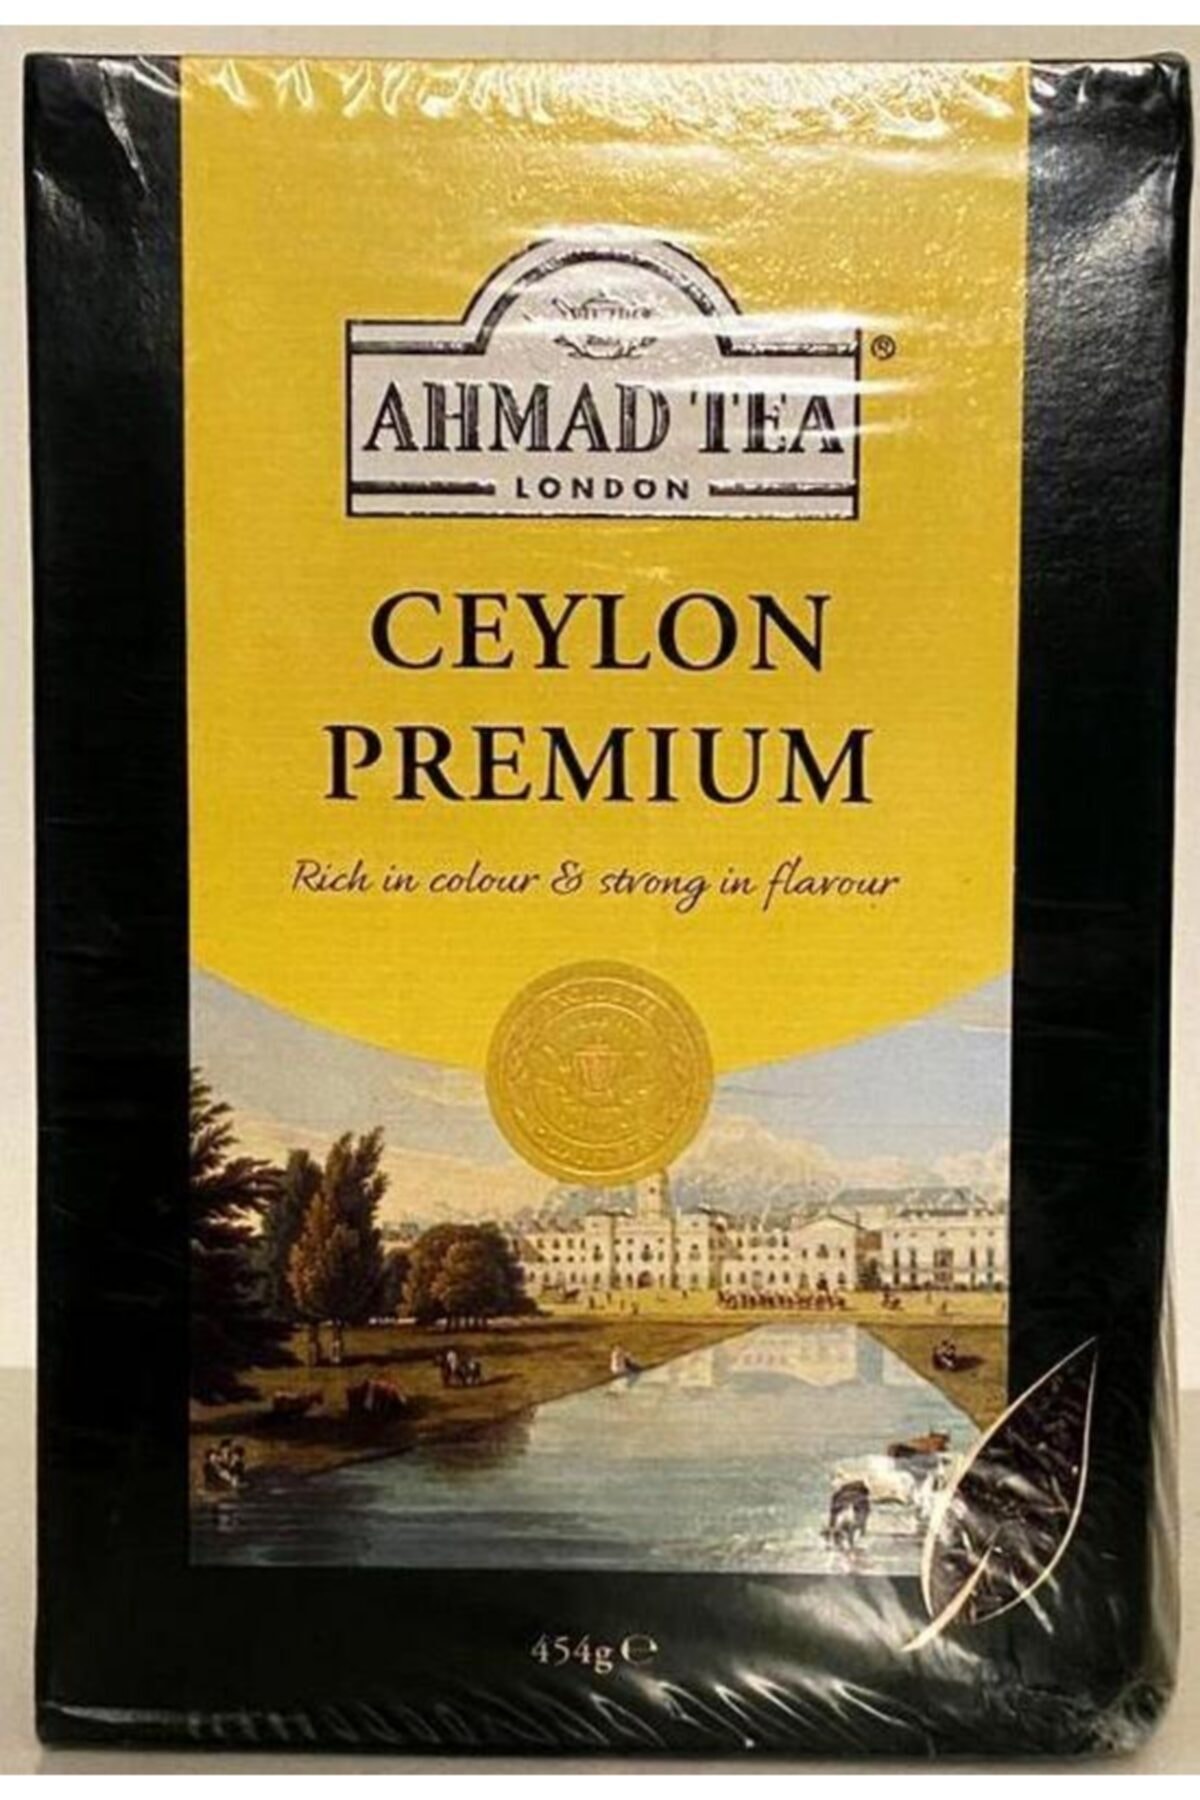 London Ceylon Premium (1. KALİTE SEYLAN) Demleme Siyah Çay